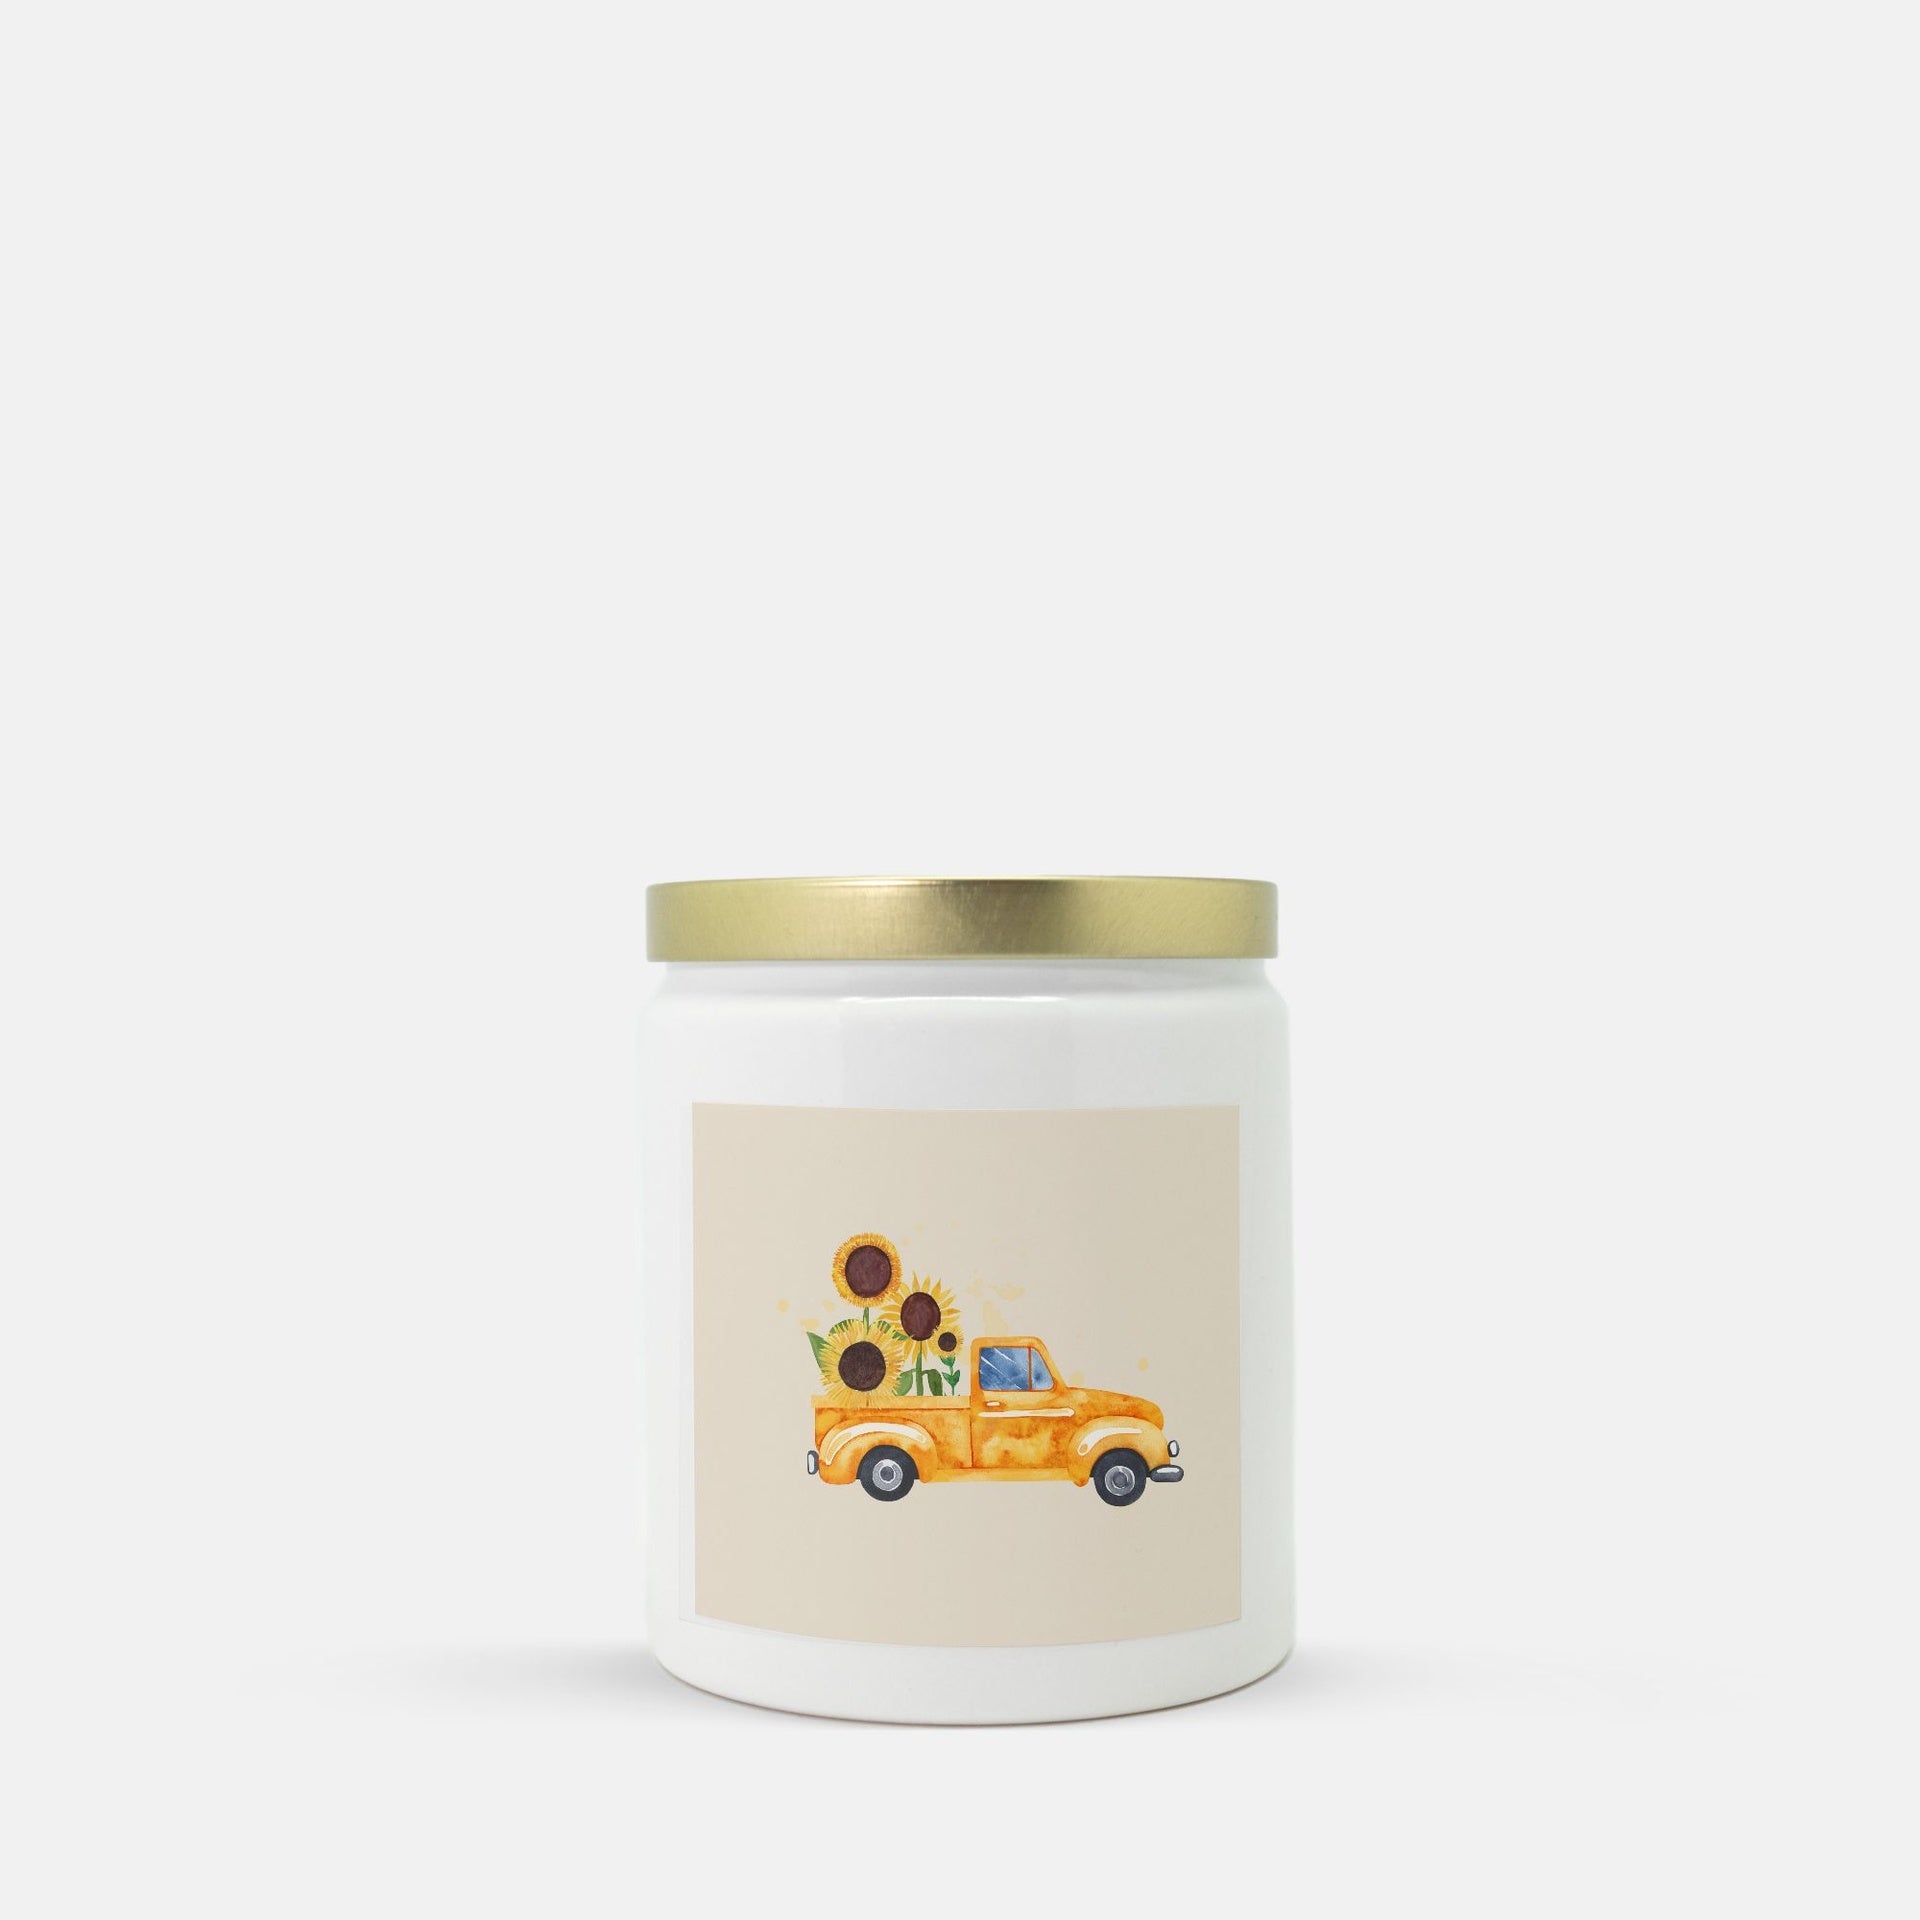 Lifestyle Details - Orange Rustic Truck & Sunflowers Ceramic Candle w Gold Lid - Macintosh